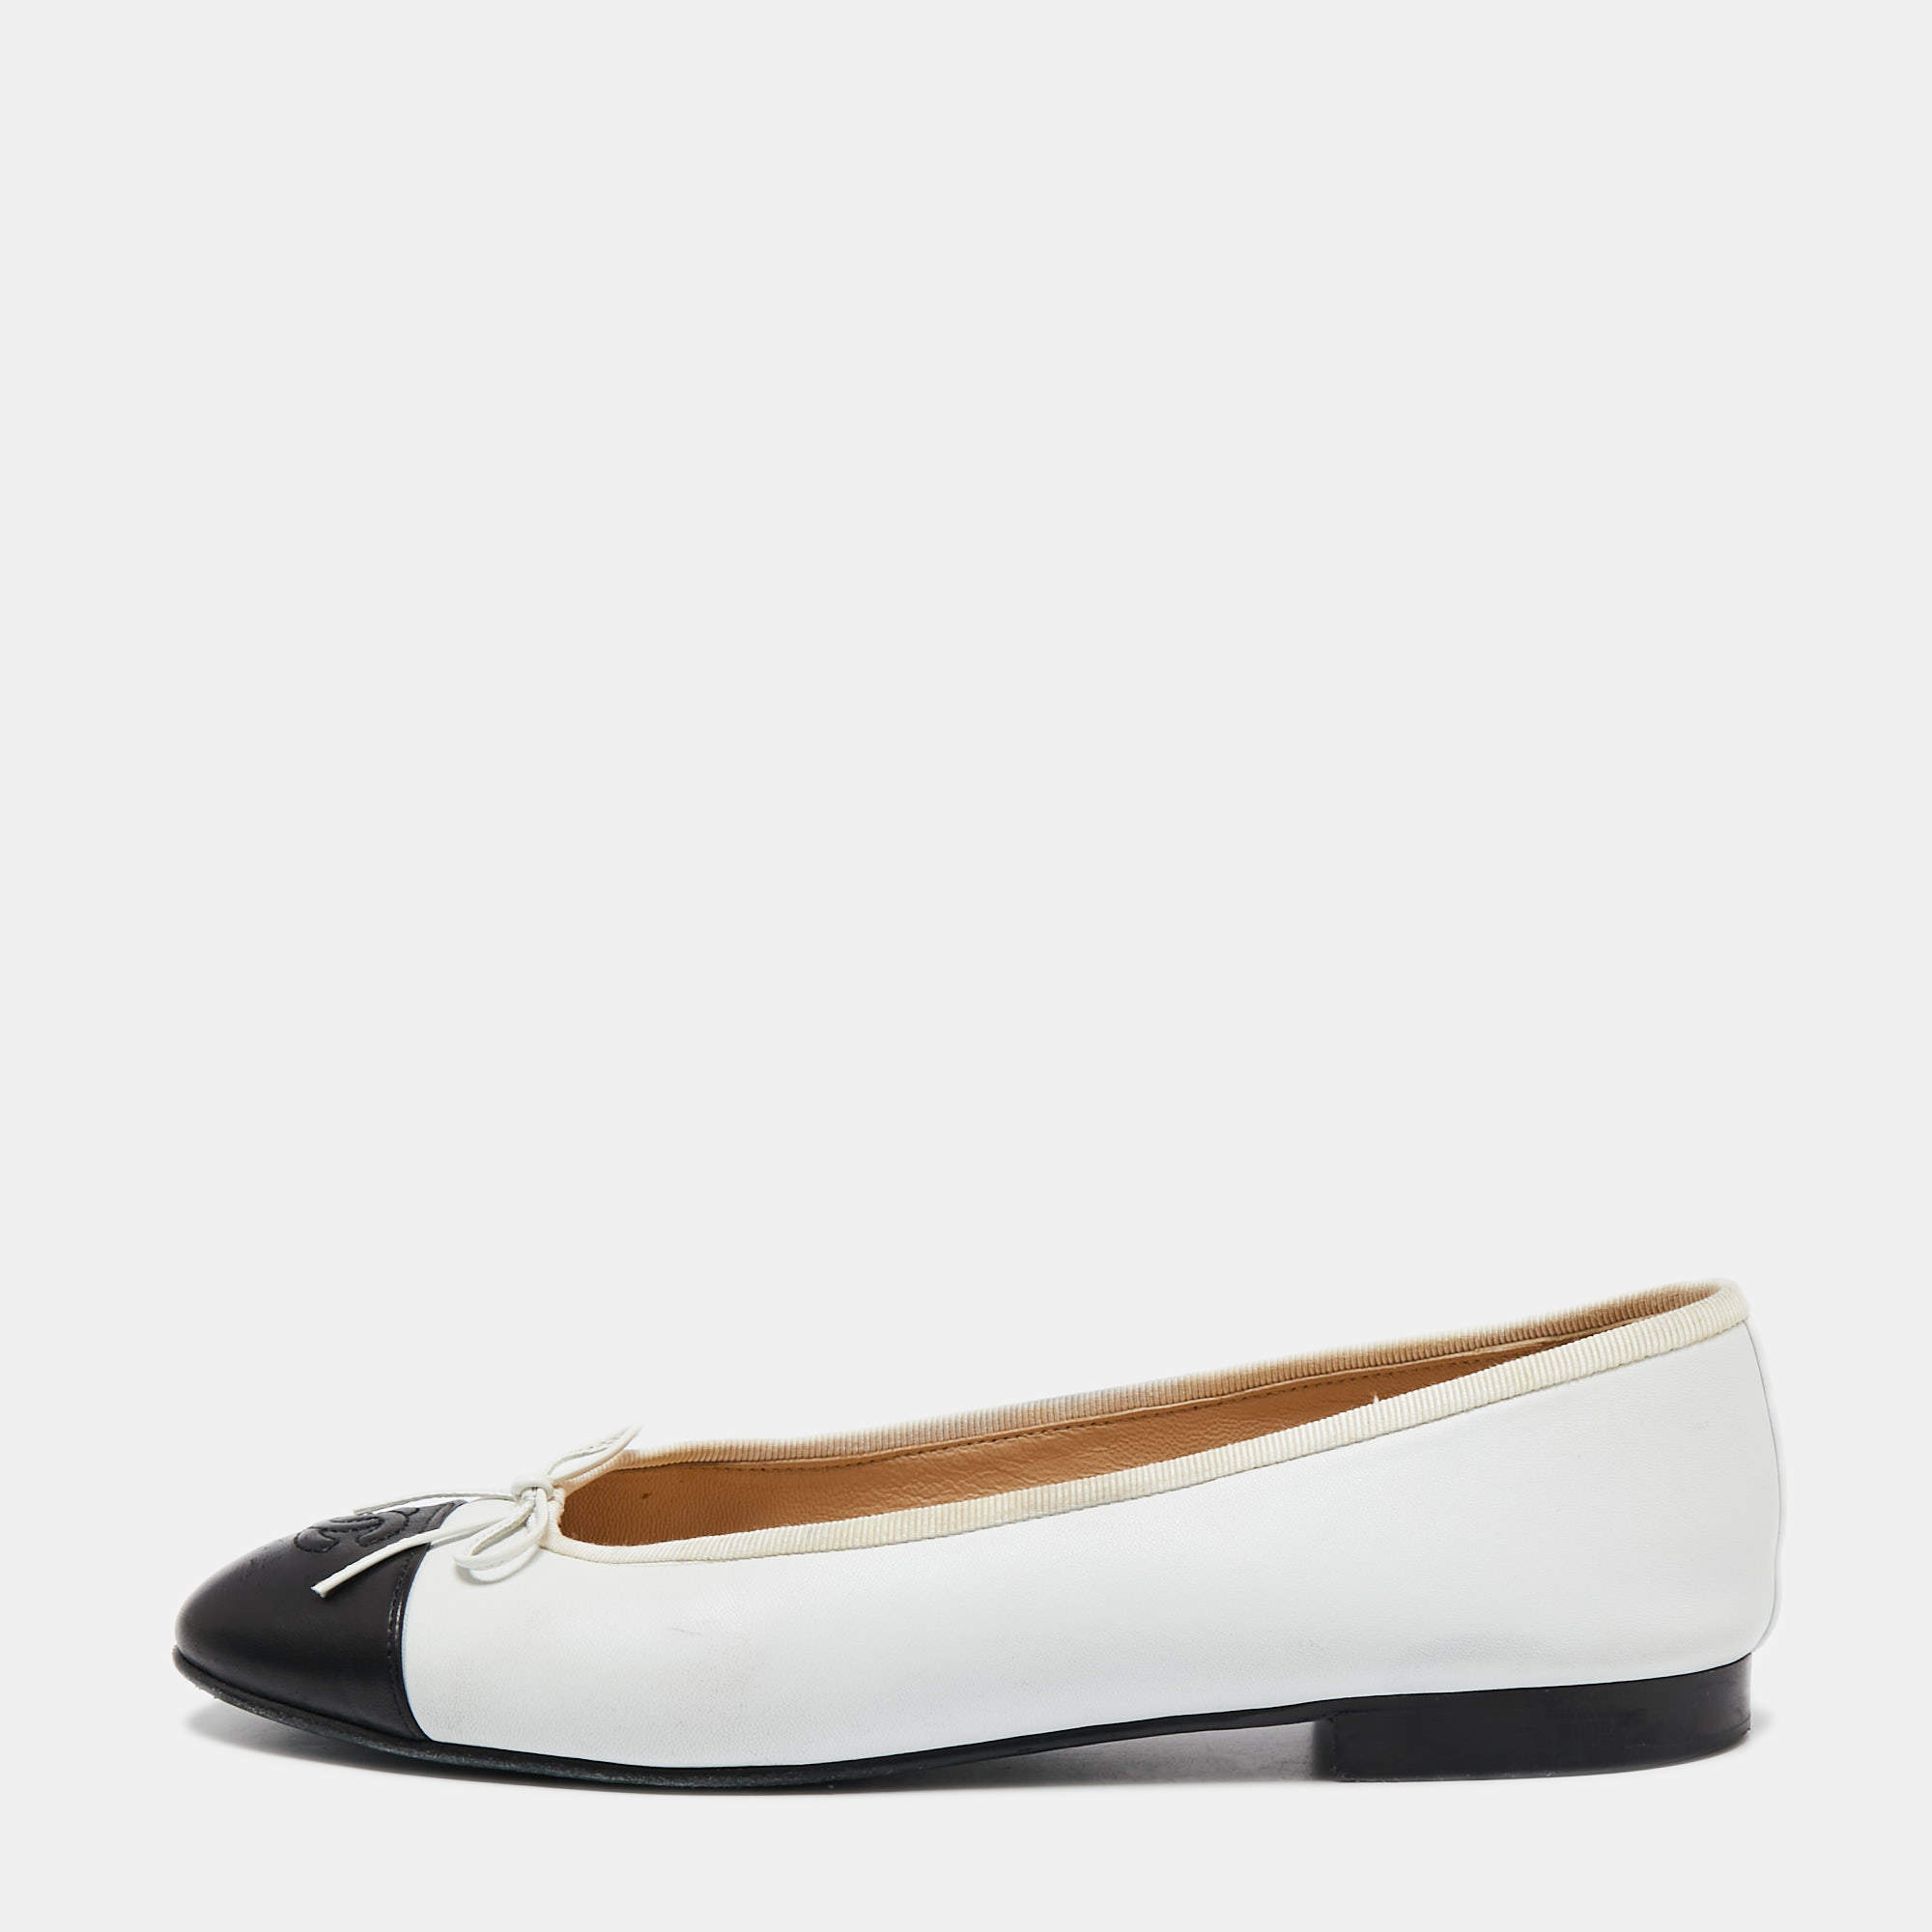 Chanel White/Black Leather CC Cap toe Ballet Flats Size 41 Chanel